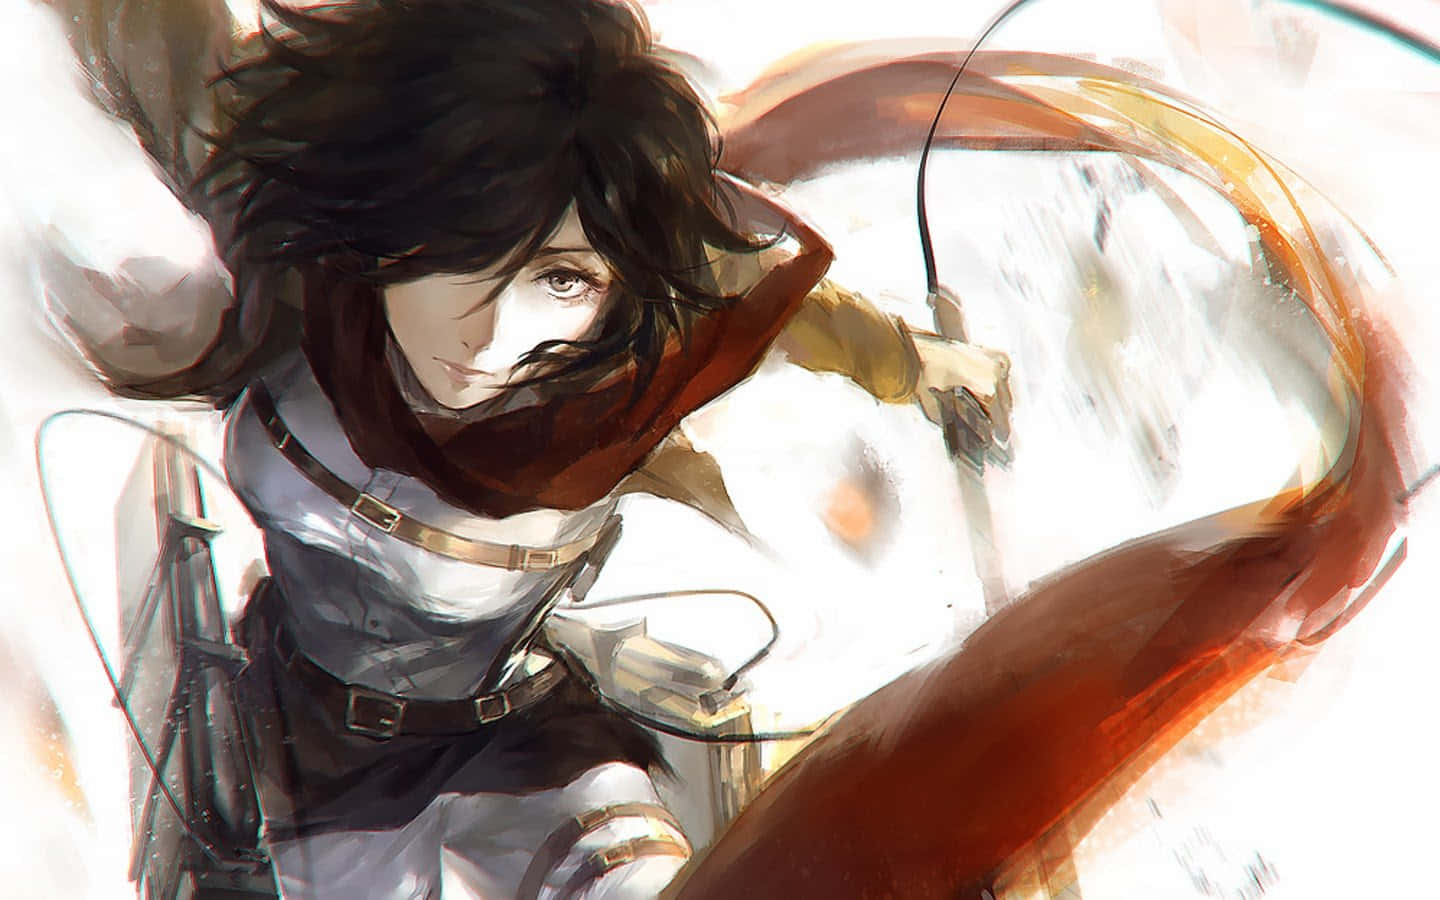 Mikasa Pfp In Battle Wallpaper